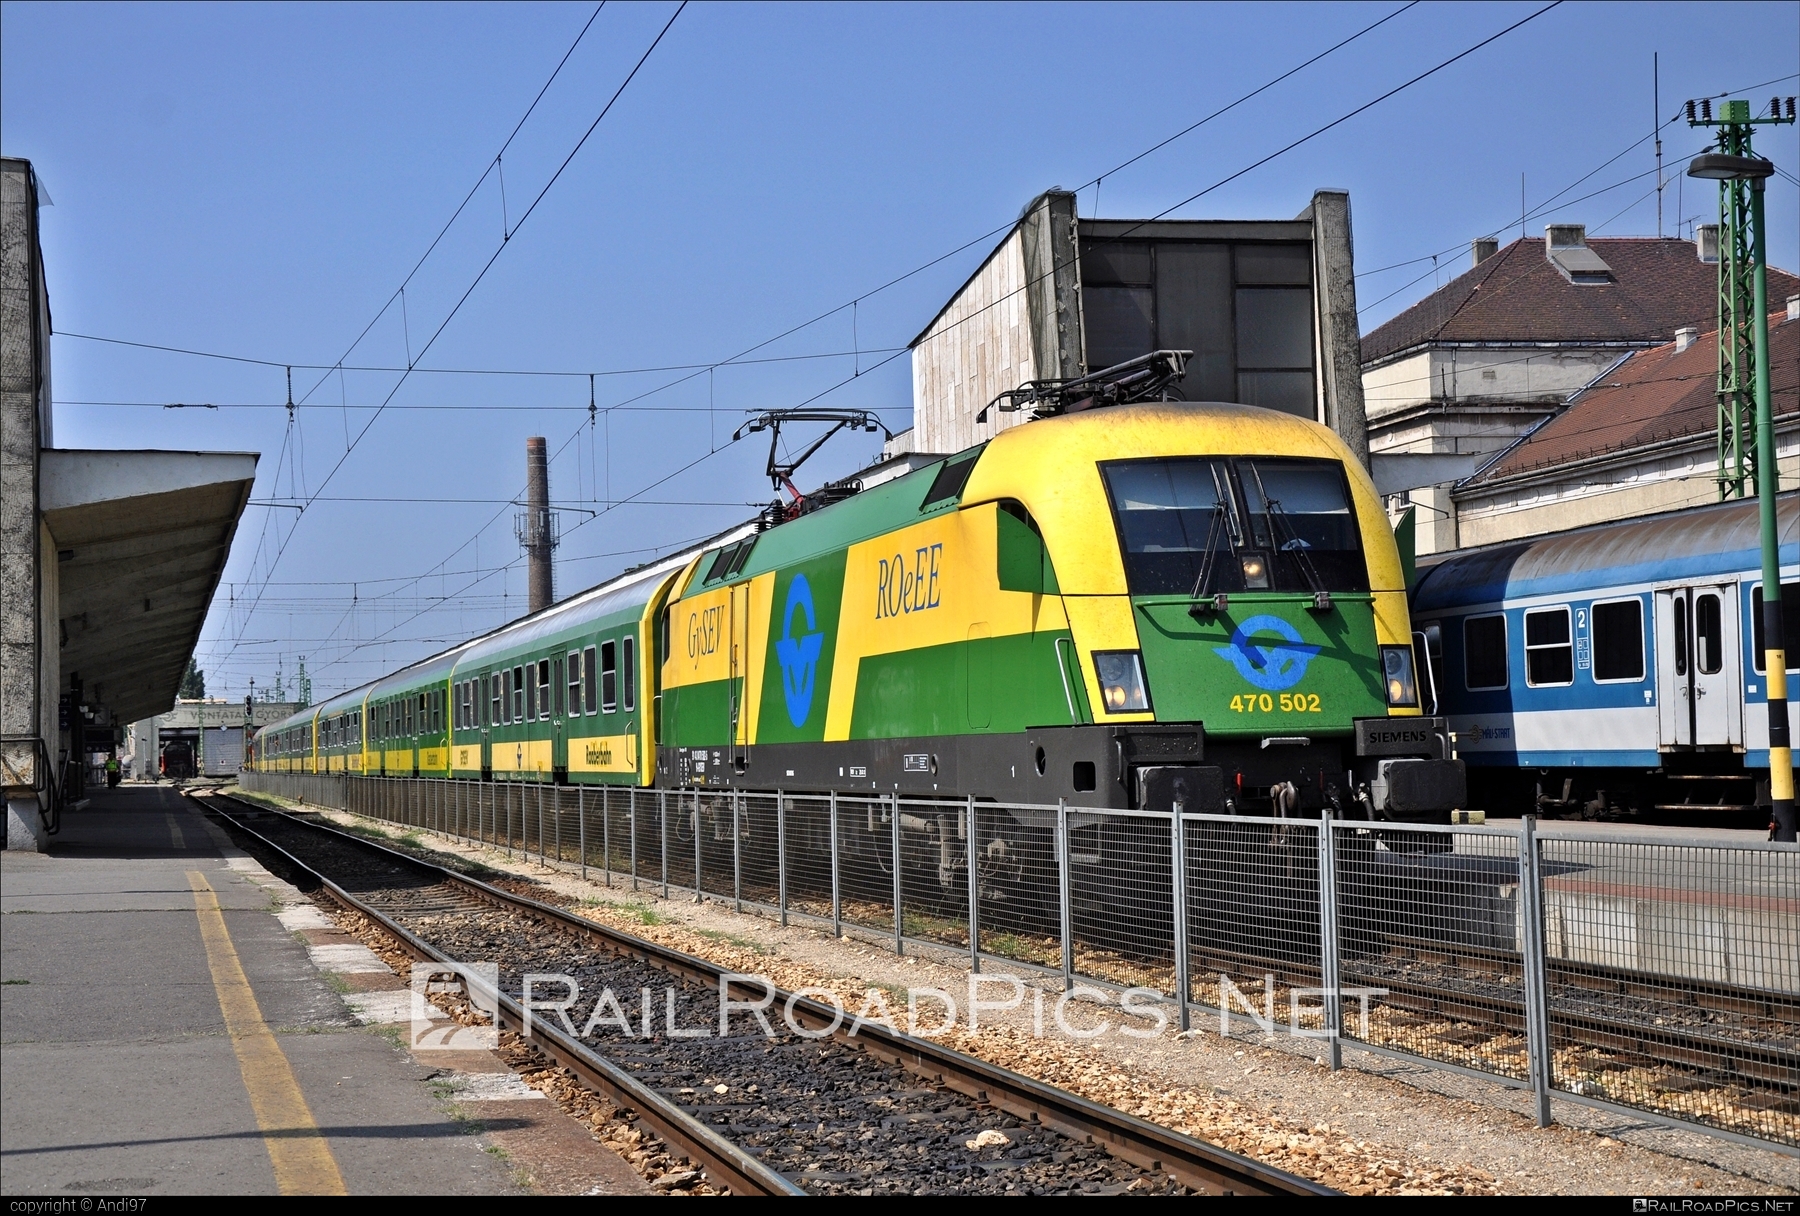 Siemens ES 64 U2 - 470 502 operated by GYSEV - Györ-Sopron-Ebenfurti Vasut Részvénytarsasag #es64 #es64u2 #eurosprinter #gyorsopronebenfurtivasutreszvenytarsasag #gysev #raaberbahn #siemens #siemensEs64 #siemensEs64u2 #siemenstaurus #taurus #tauruslocomotive